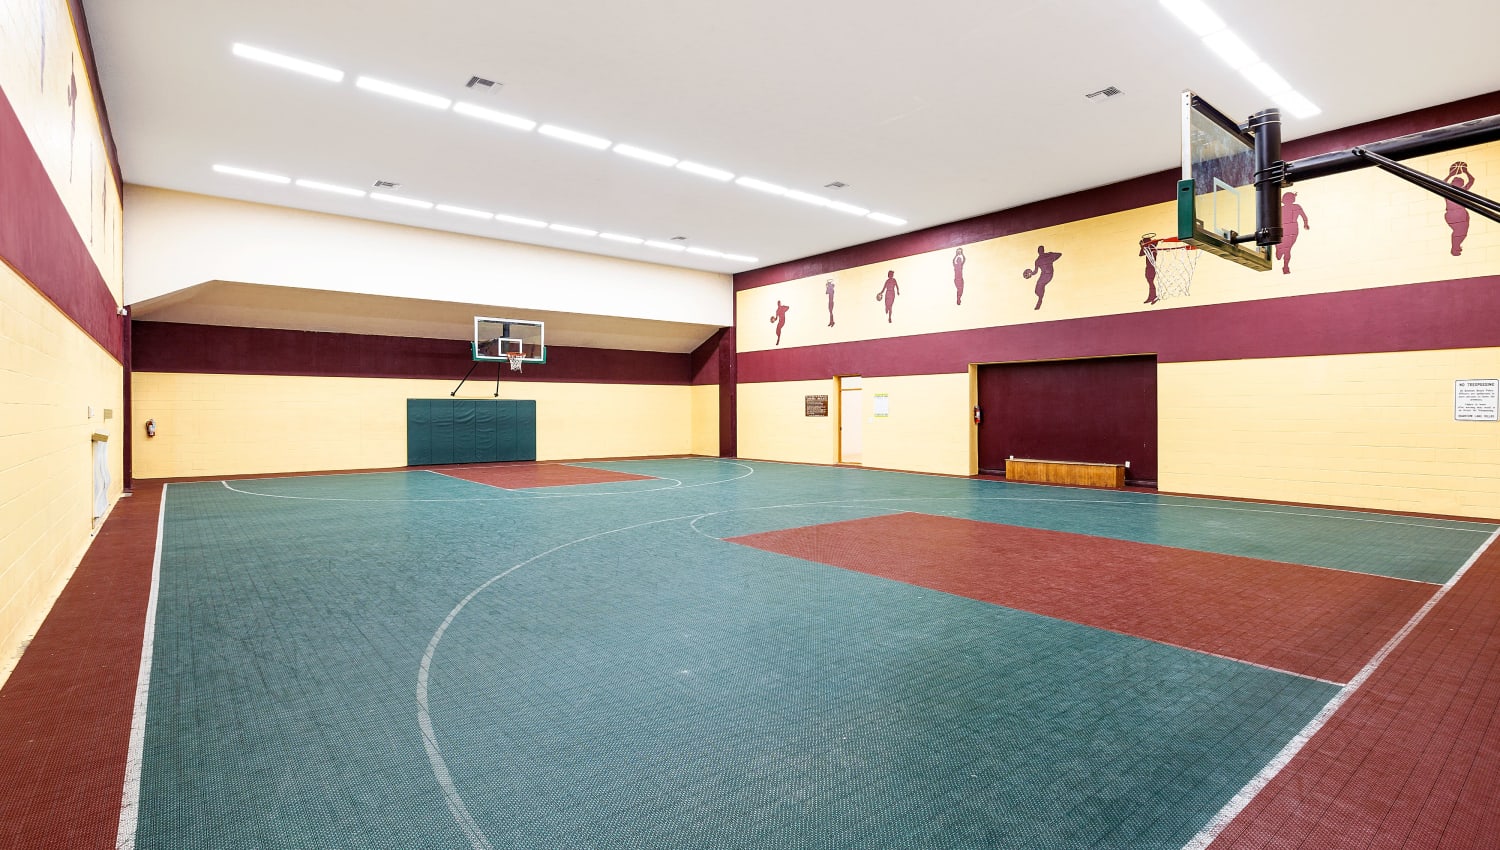 Indoor basketball court at Quantum Lake Villas Apartments in Boynton Beach, Florida